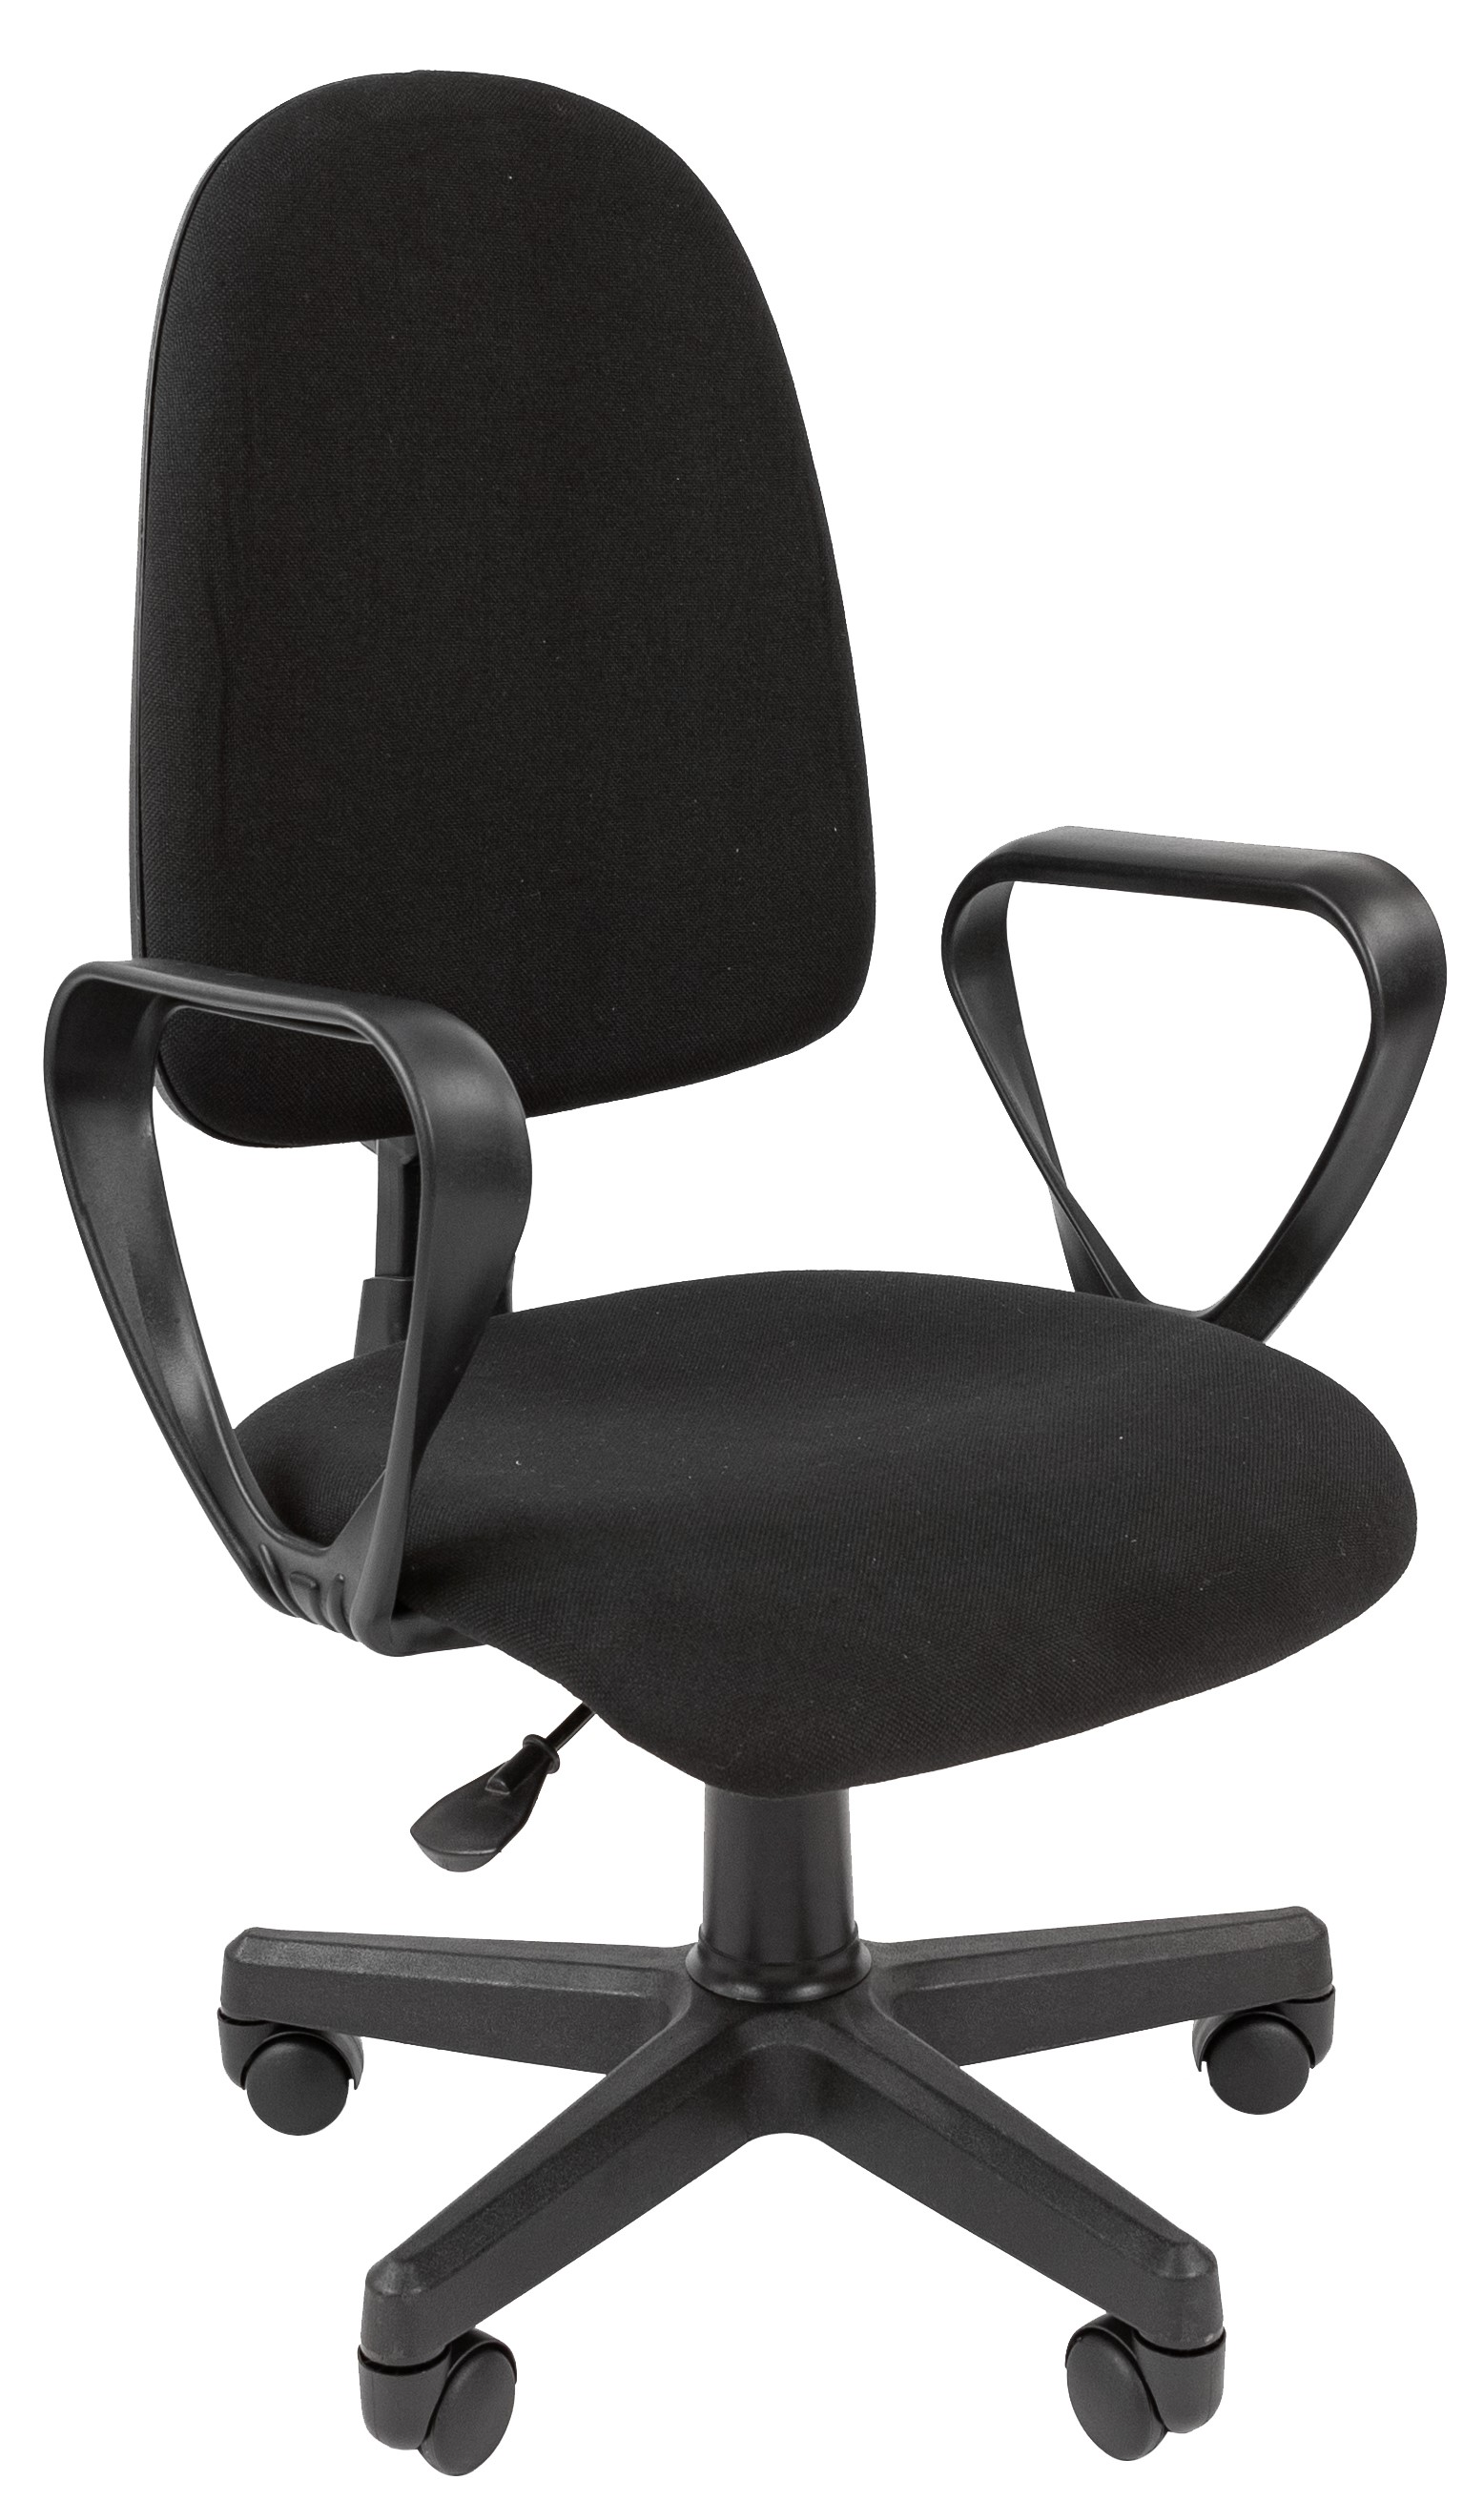 Офисное кресло Chairman стандарт Престиж с-3